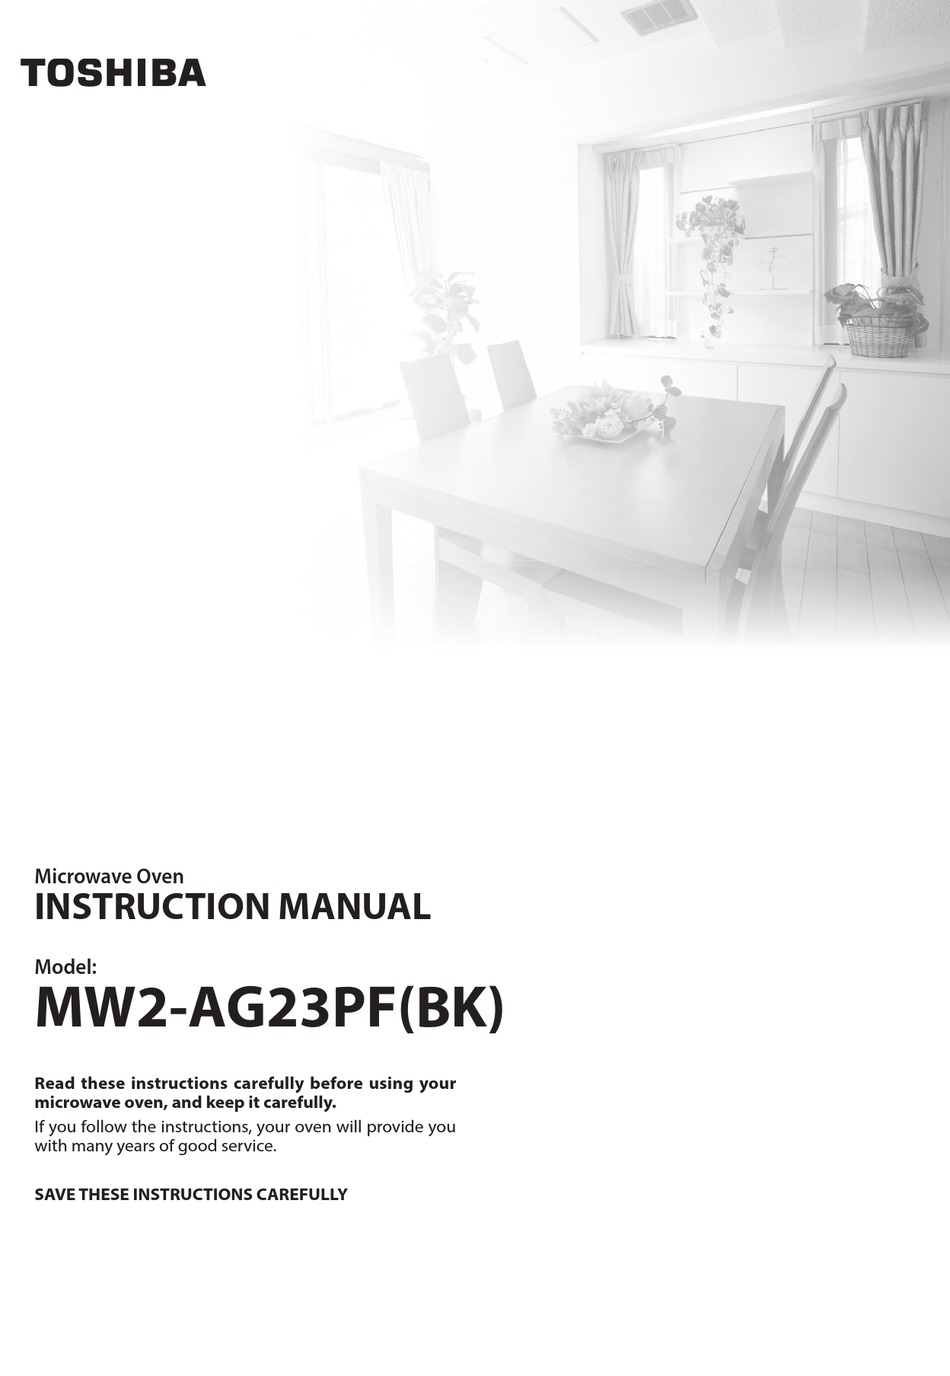 TOSHIBA MW2-AG23PF INSTRUCTION MANUAL Pdf Download | ManualsLib